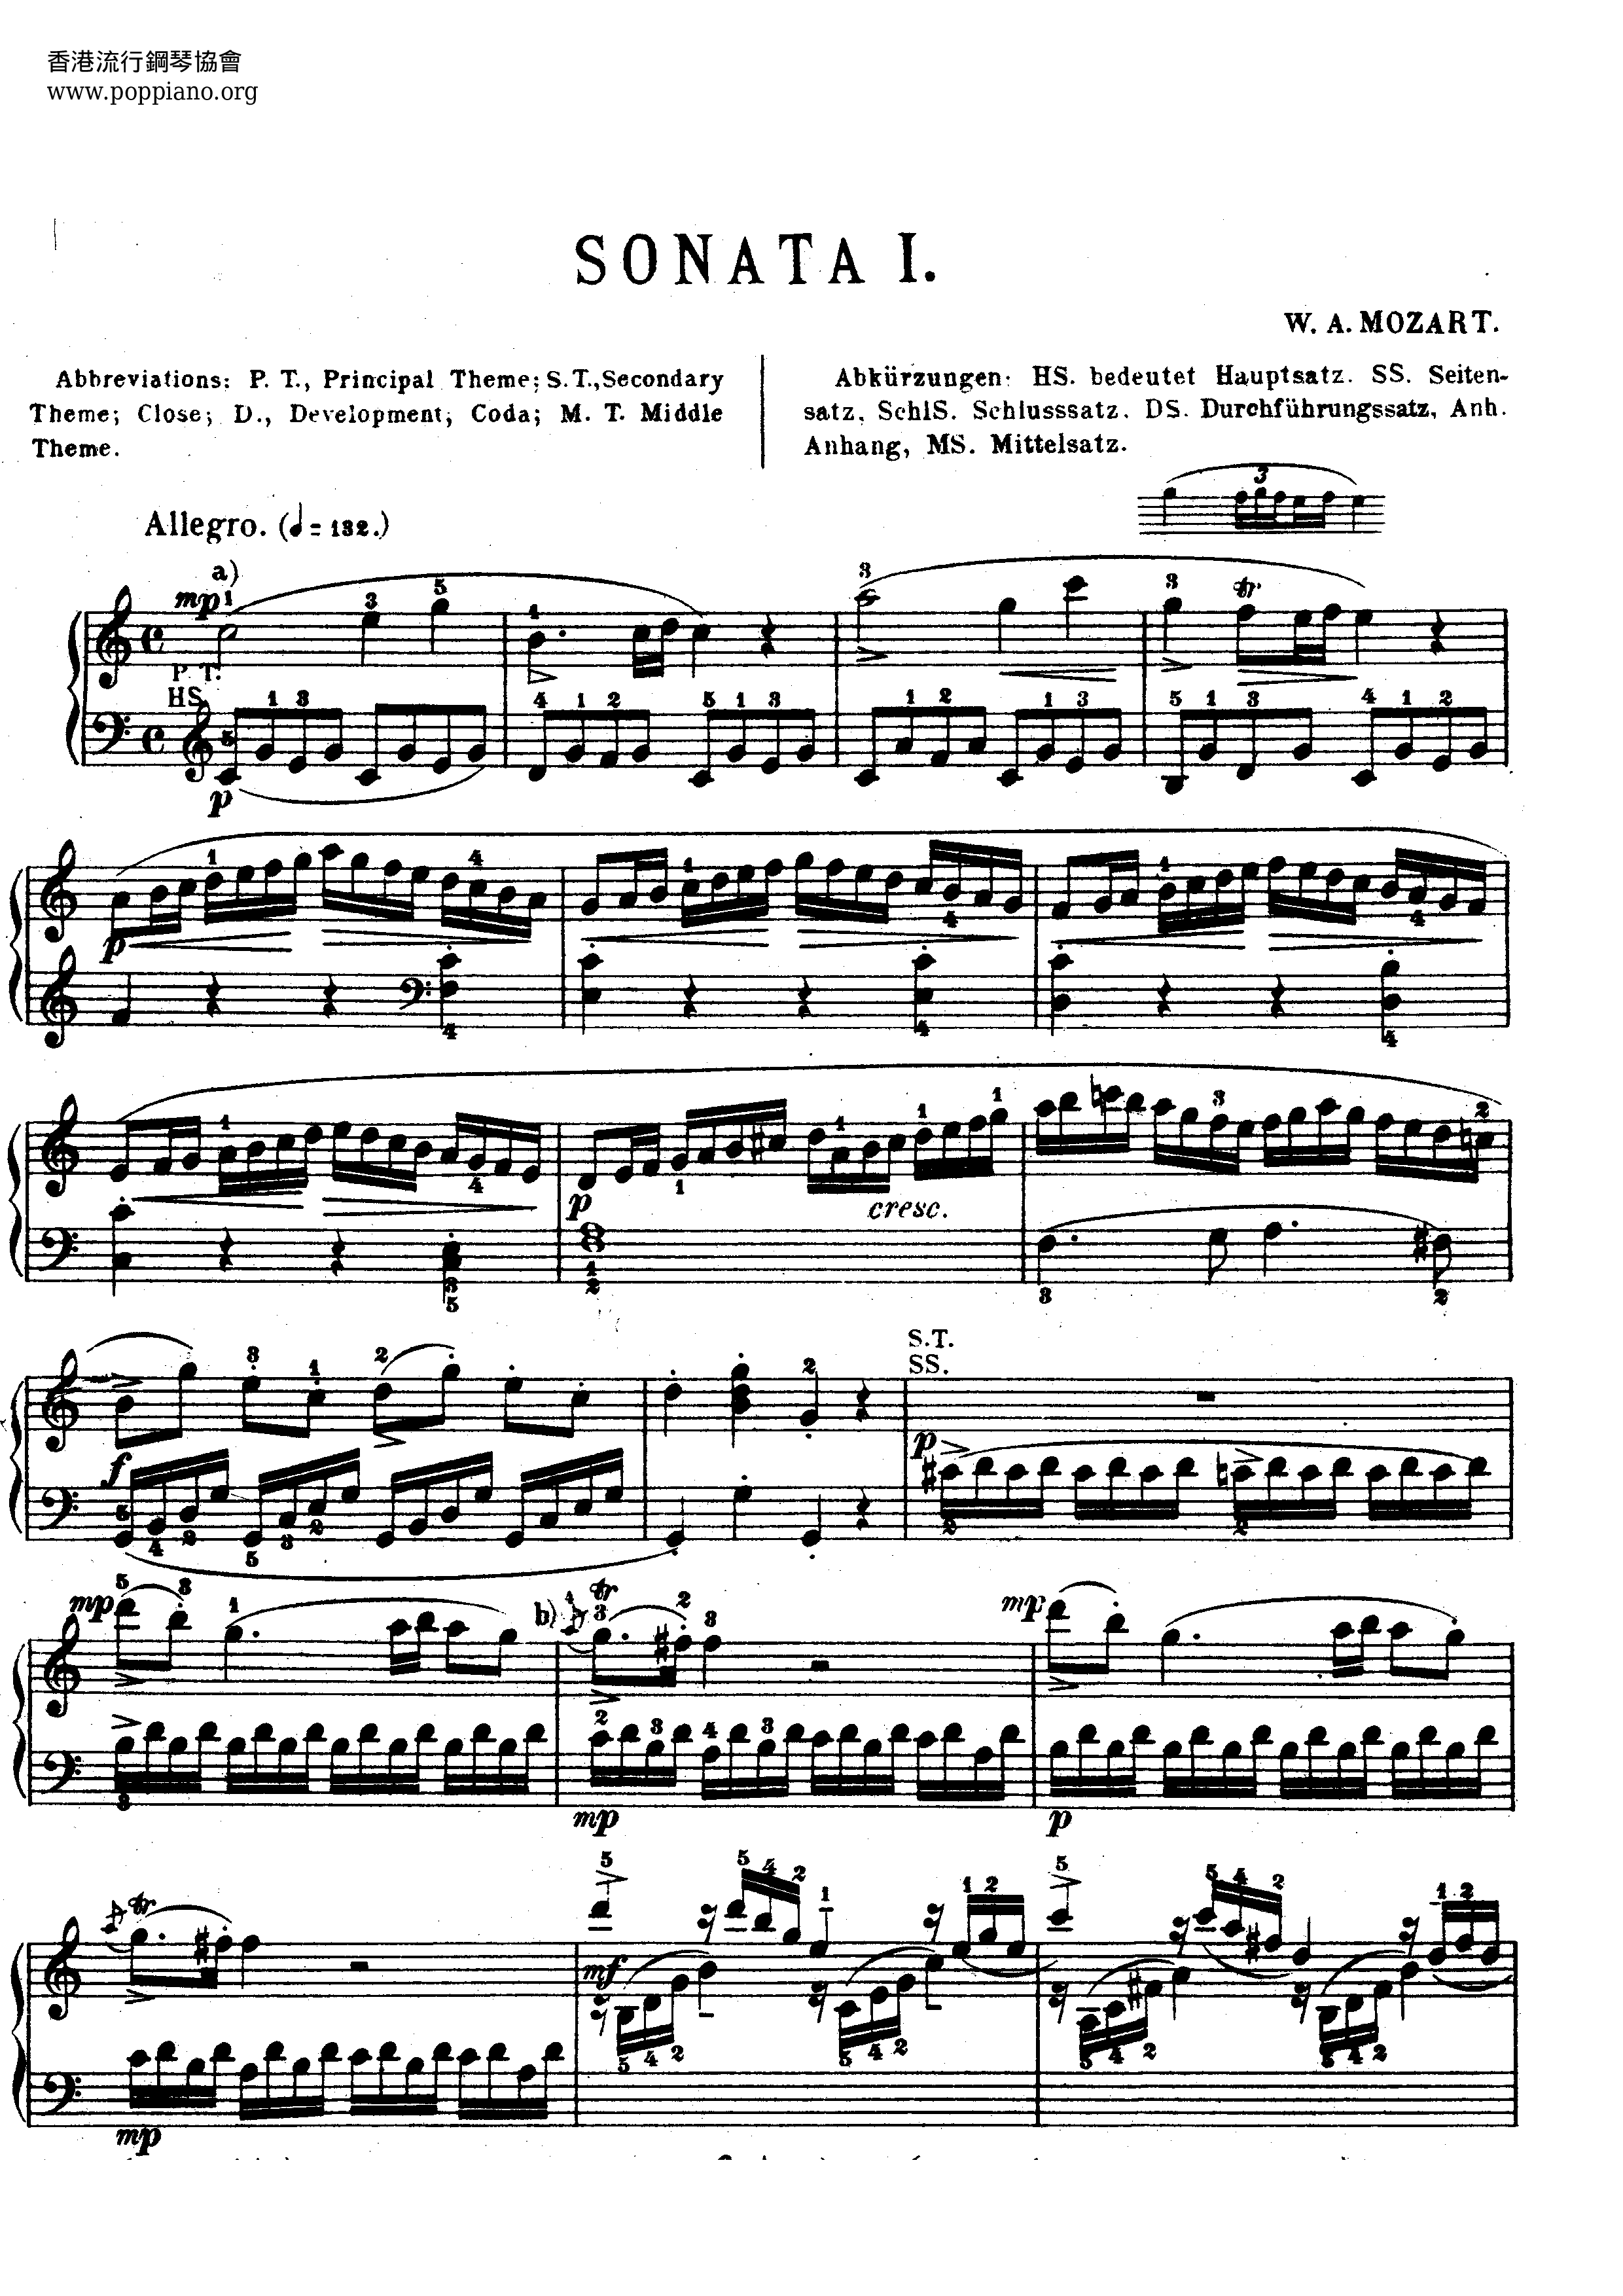 Piano Sonata No. 16 K. 545 1st Movtピアノ譜